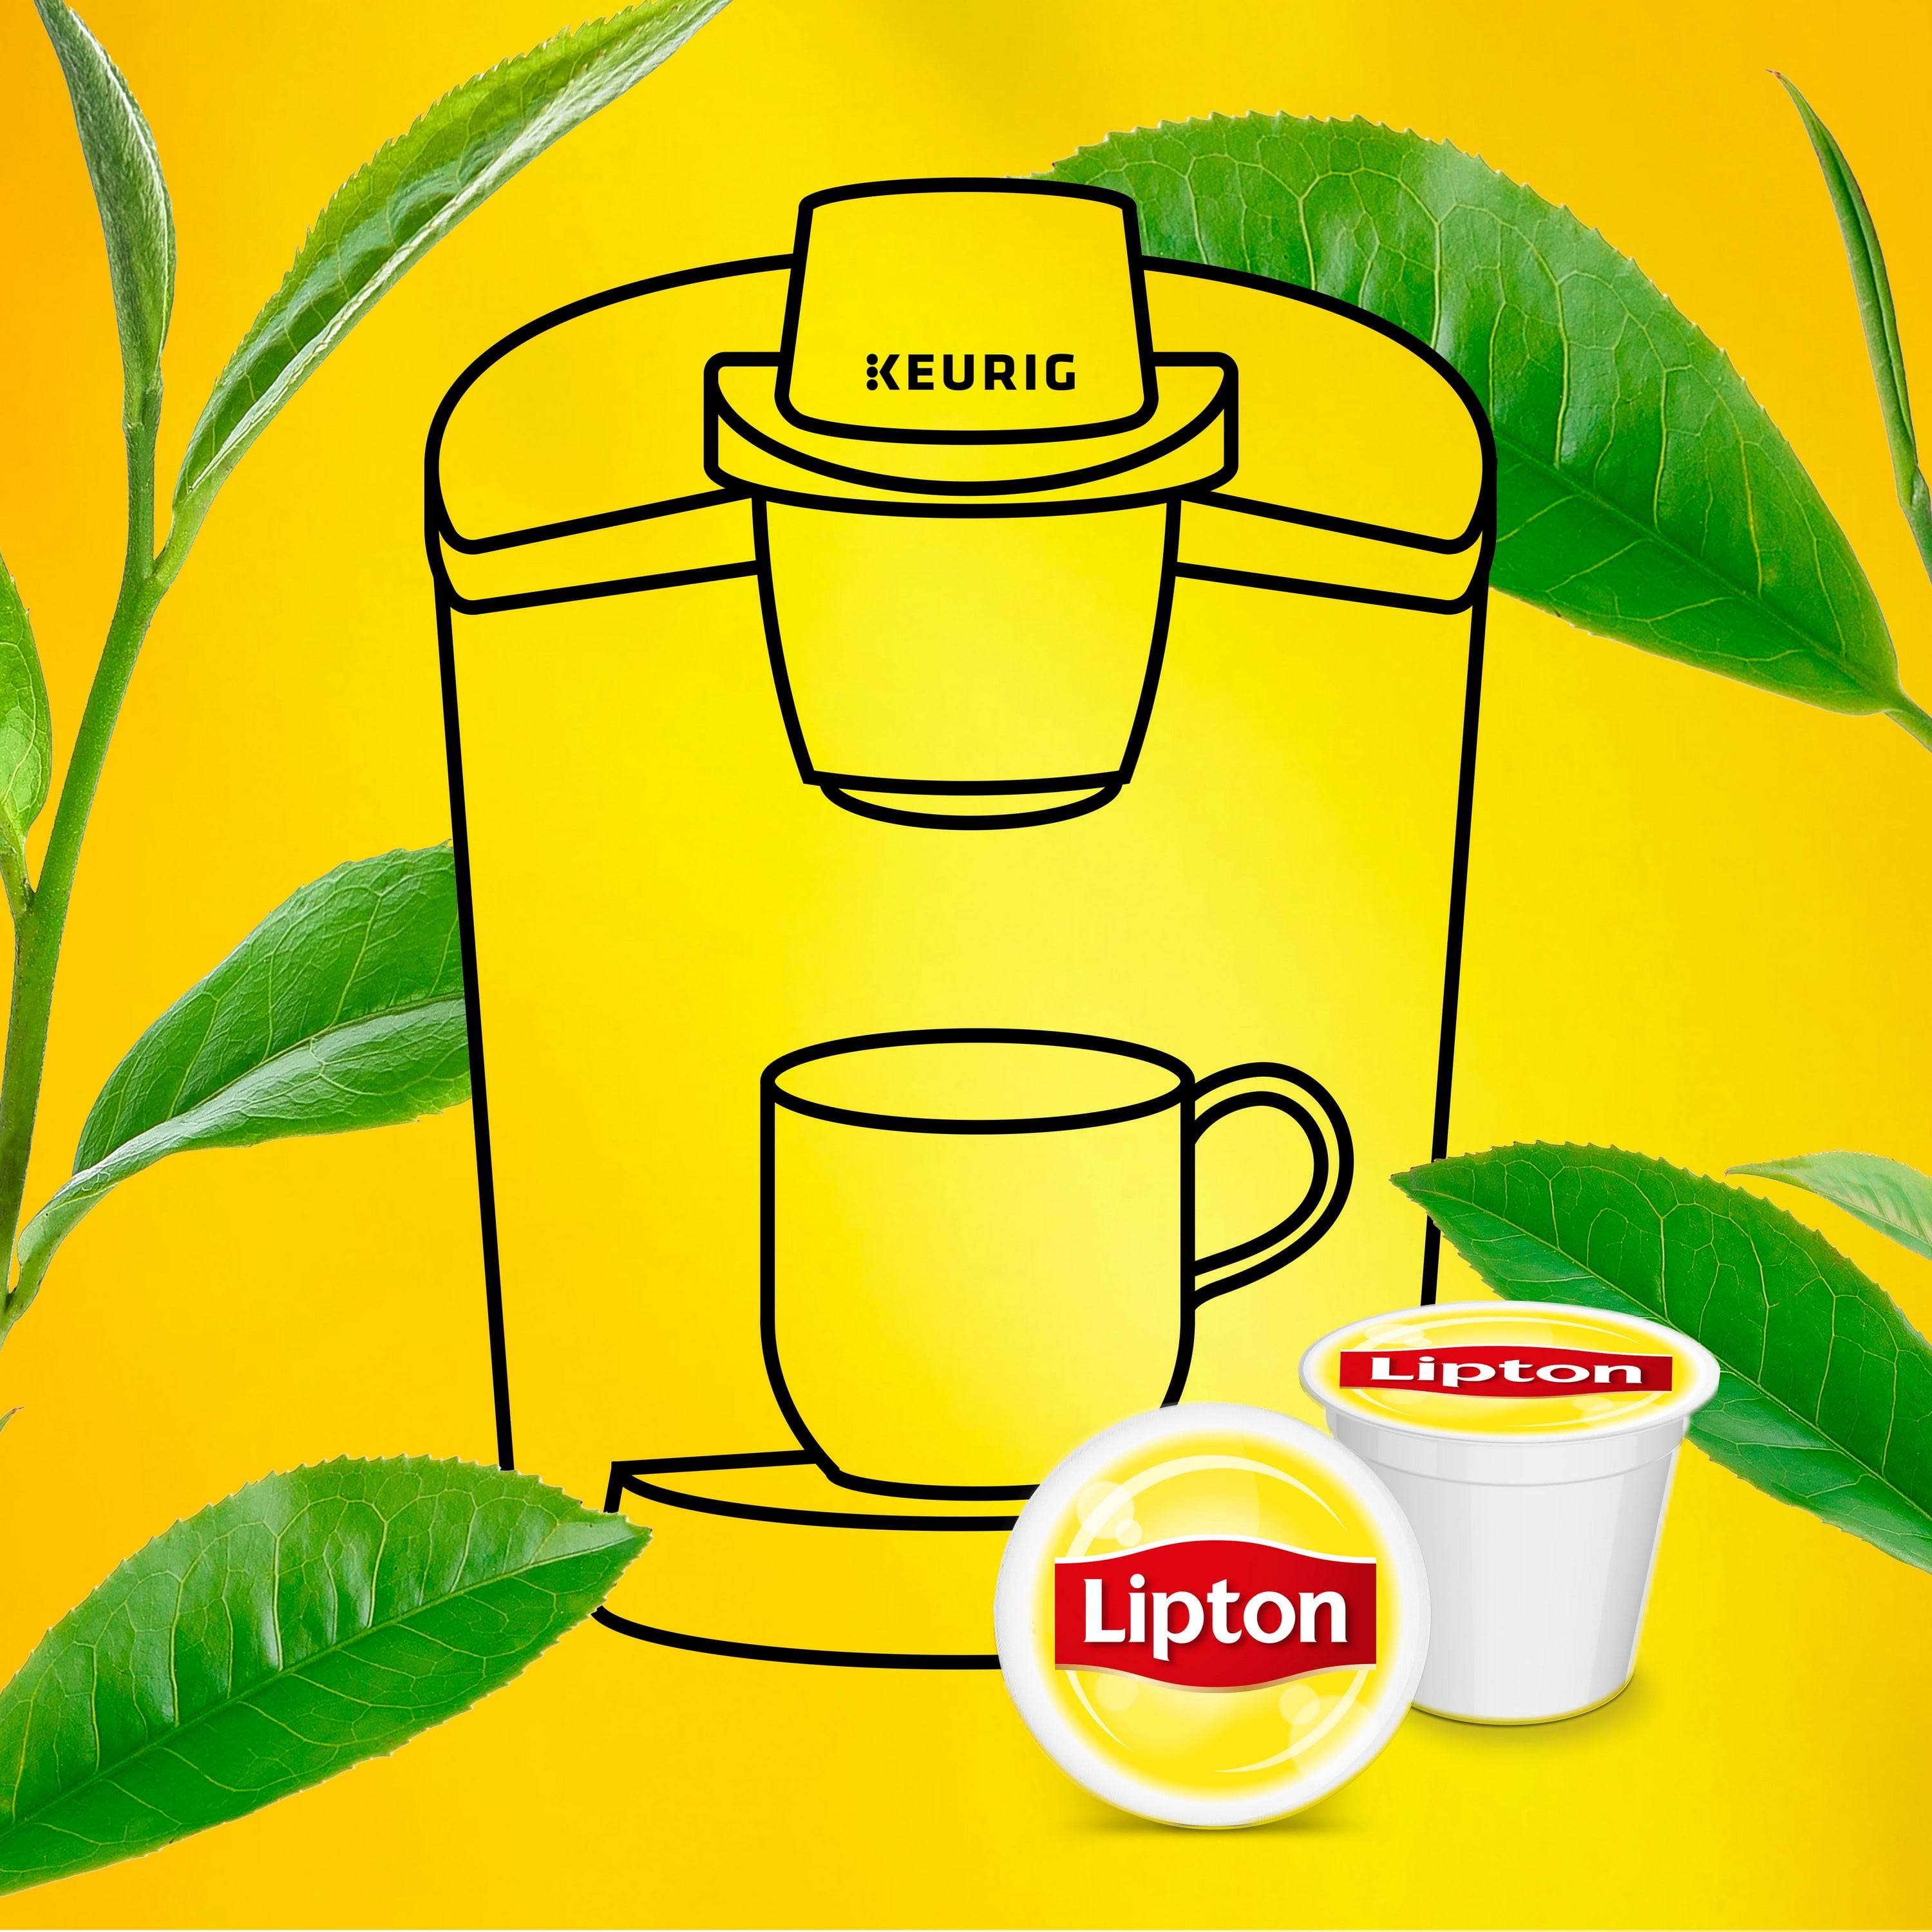 Unsweetened Iced Tea Classic Tea K Cups Pack